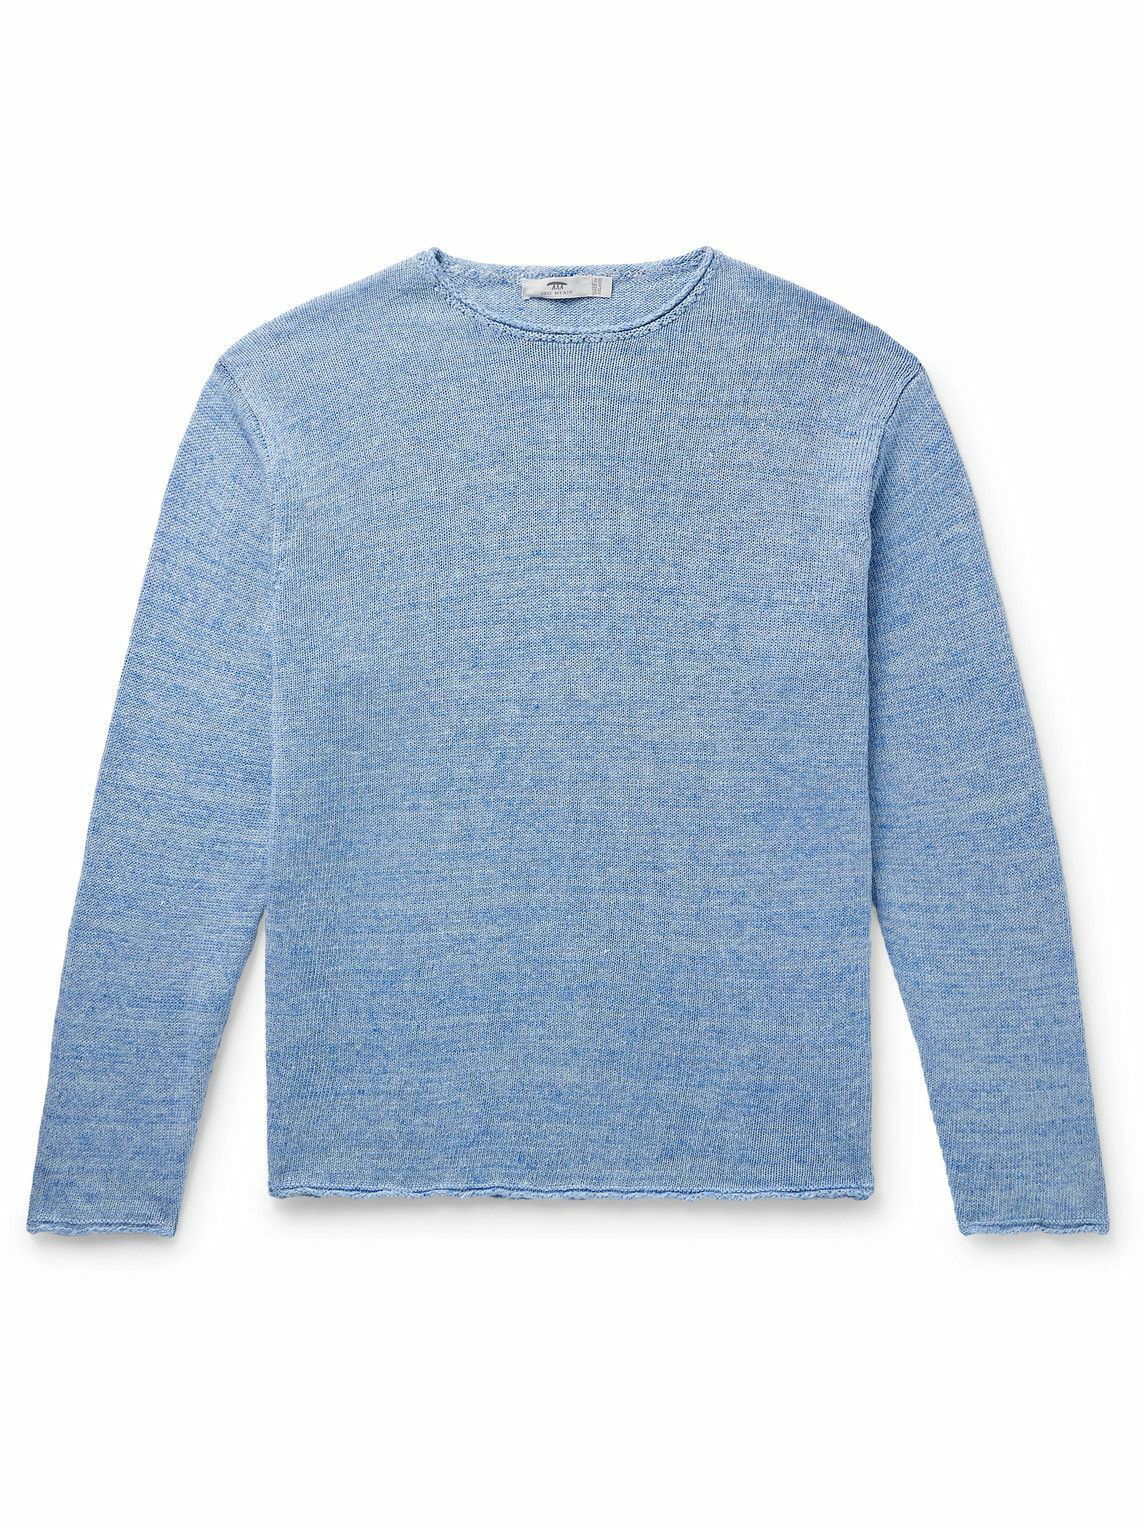 Inis Meáin - Linen Sweater - Blue Inis Meáin